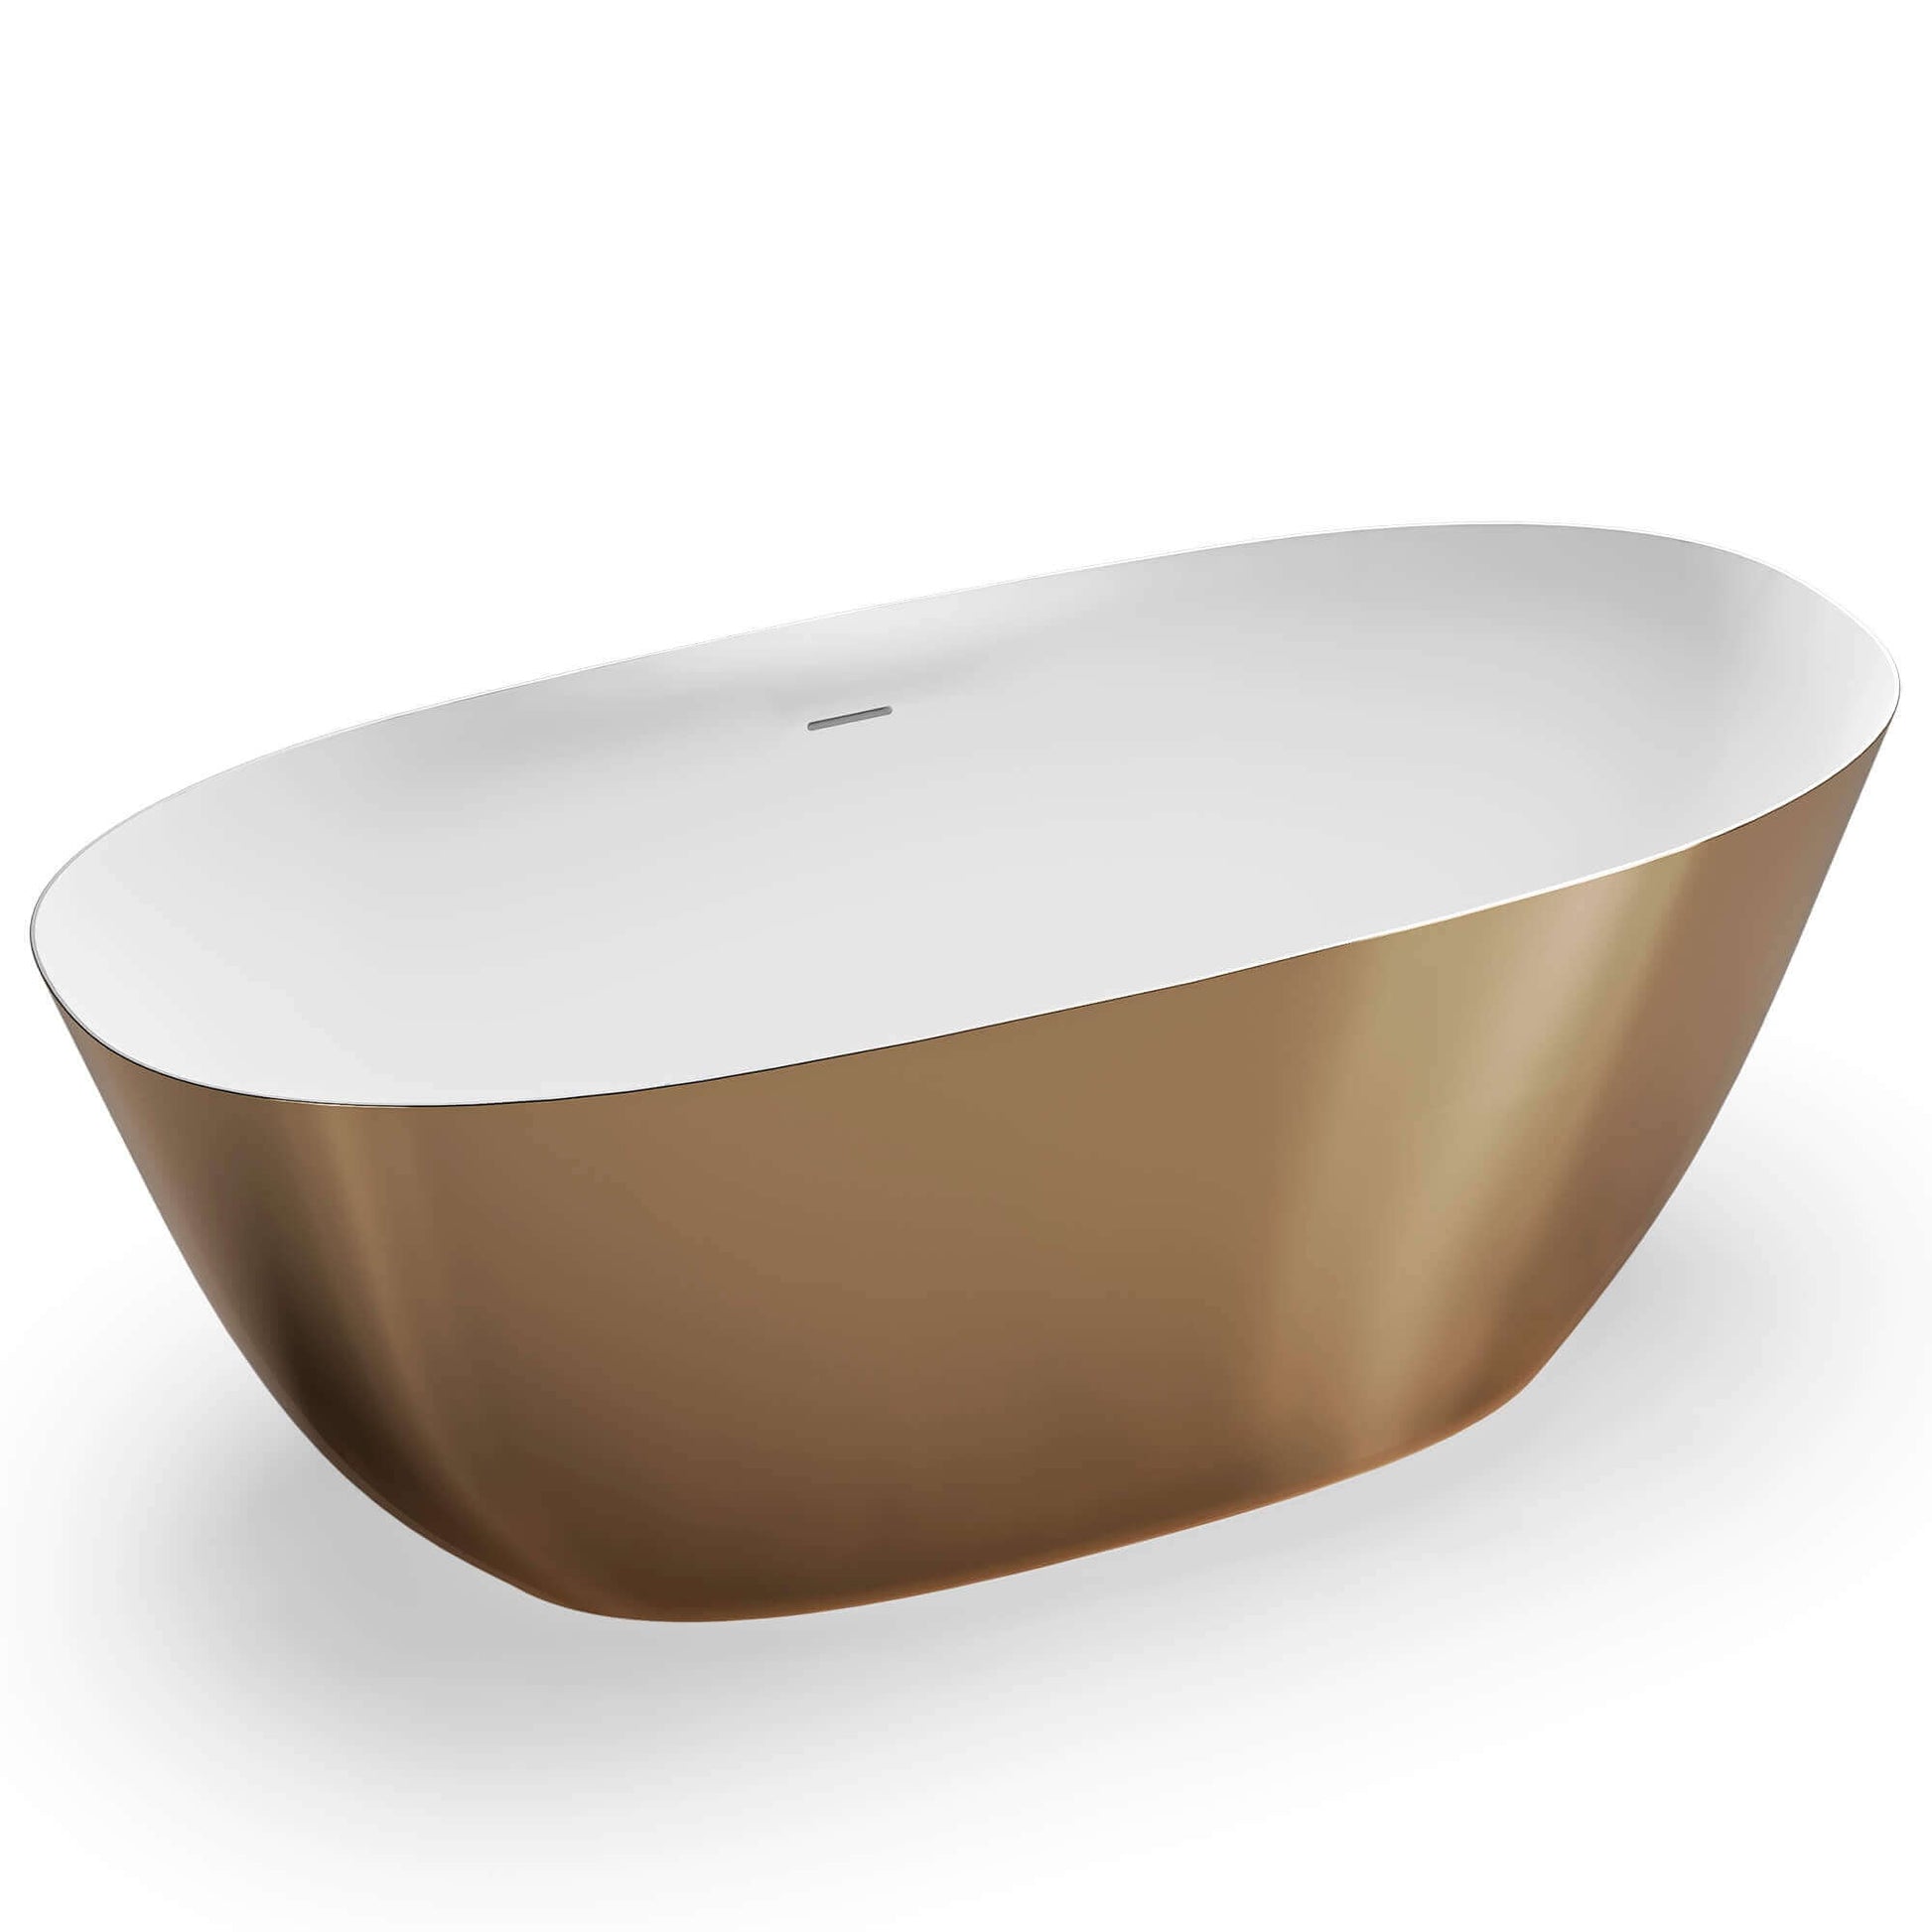 Ruvati Sinatra Matte Gold and White epiStone Freestanding Bathtub - Product Image